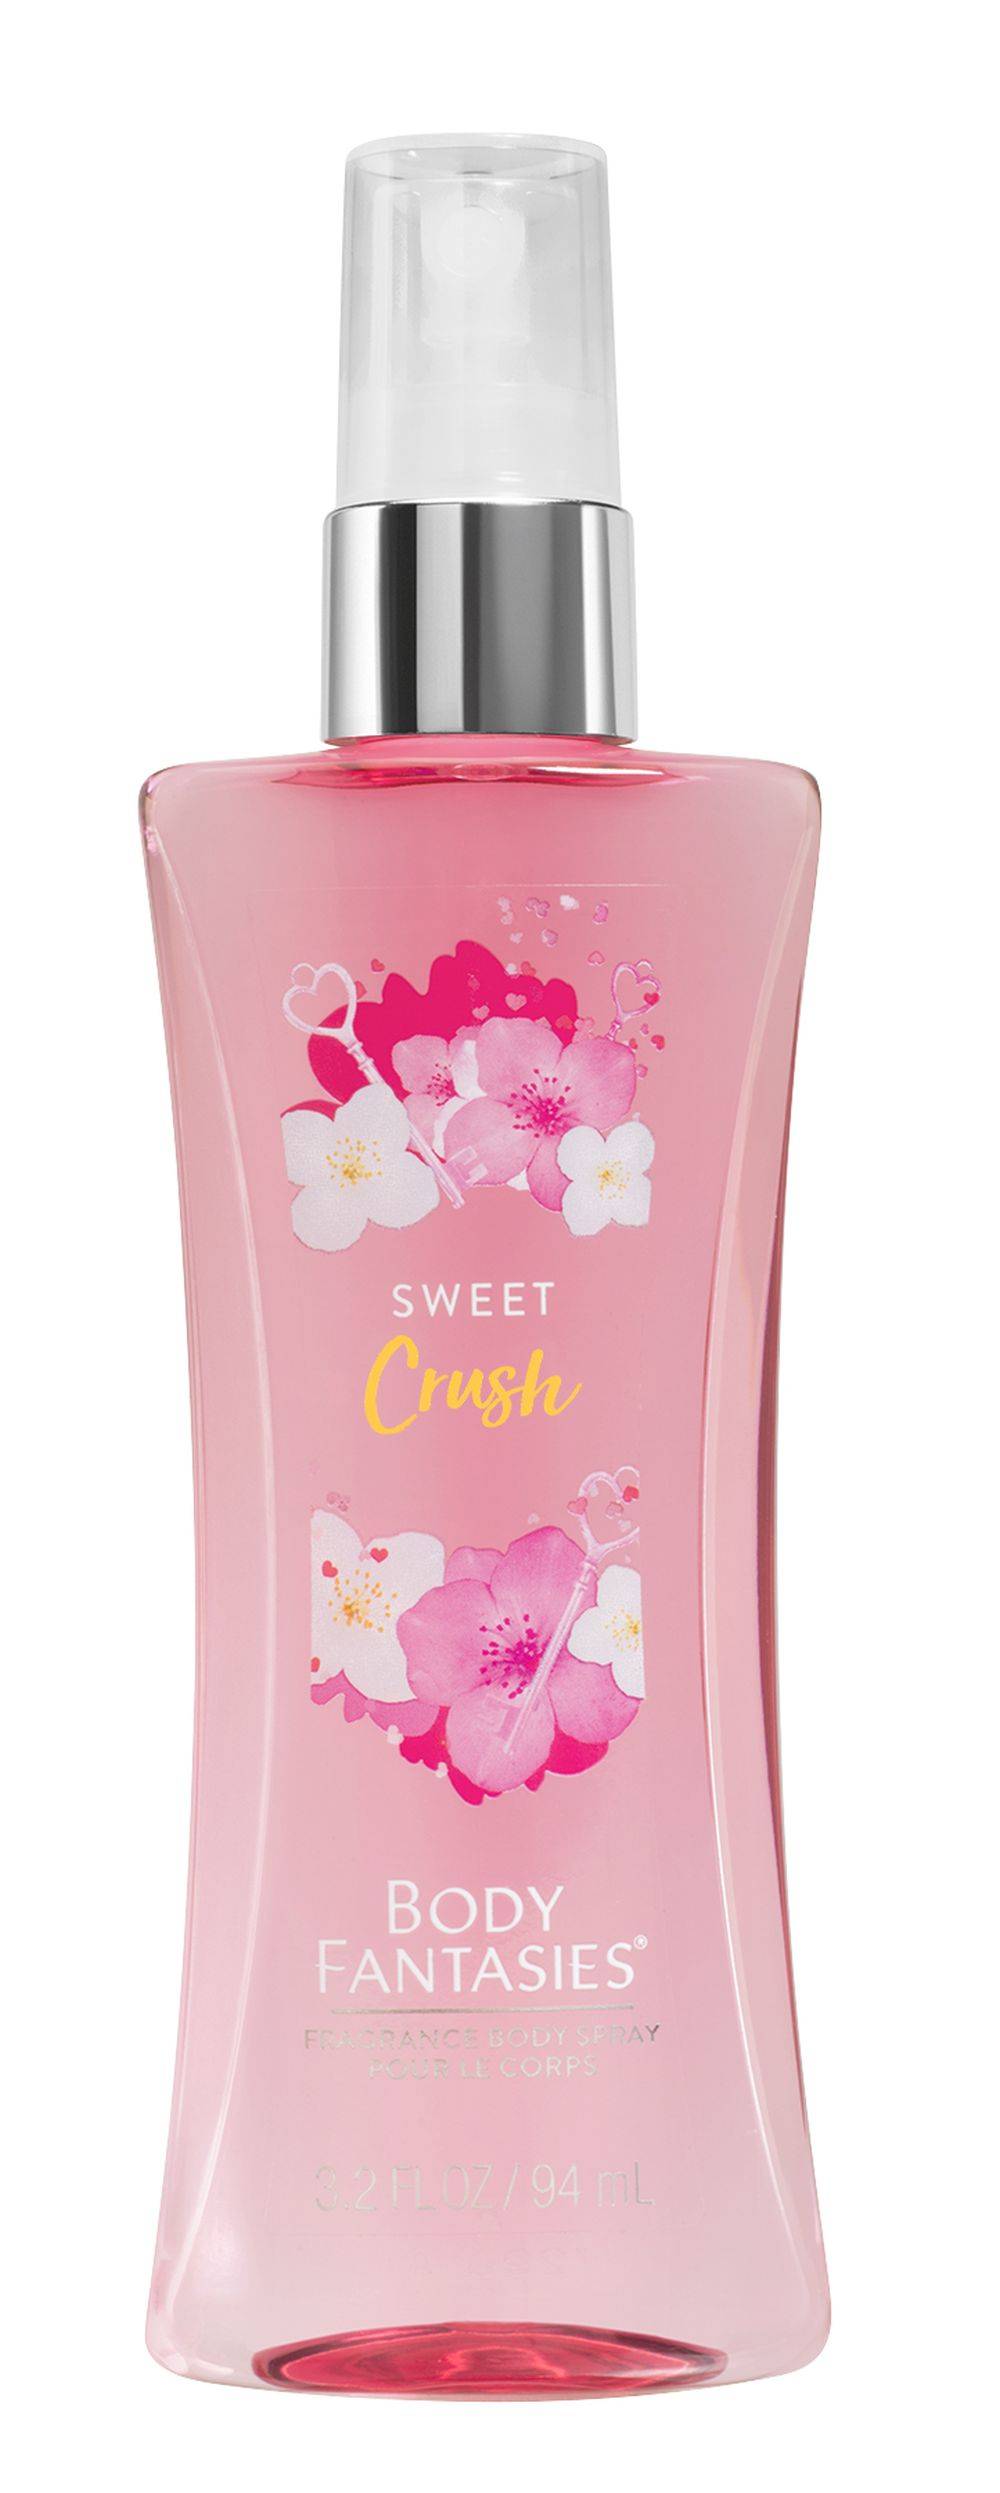 Body Fantasies Body Spray Sweet Crush (3.2 oz)